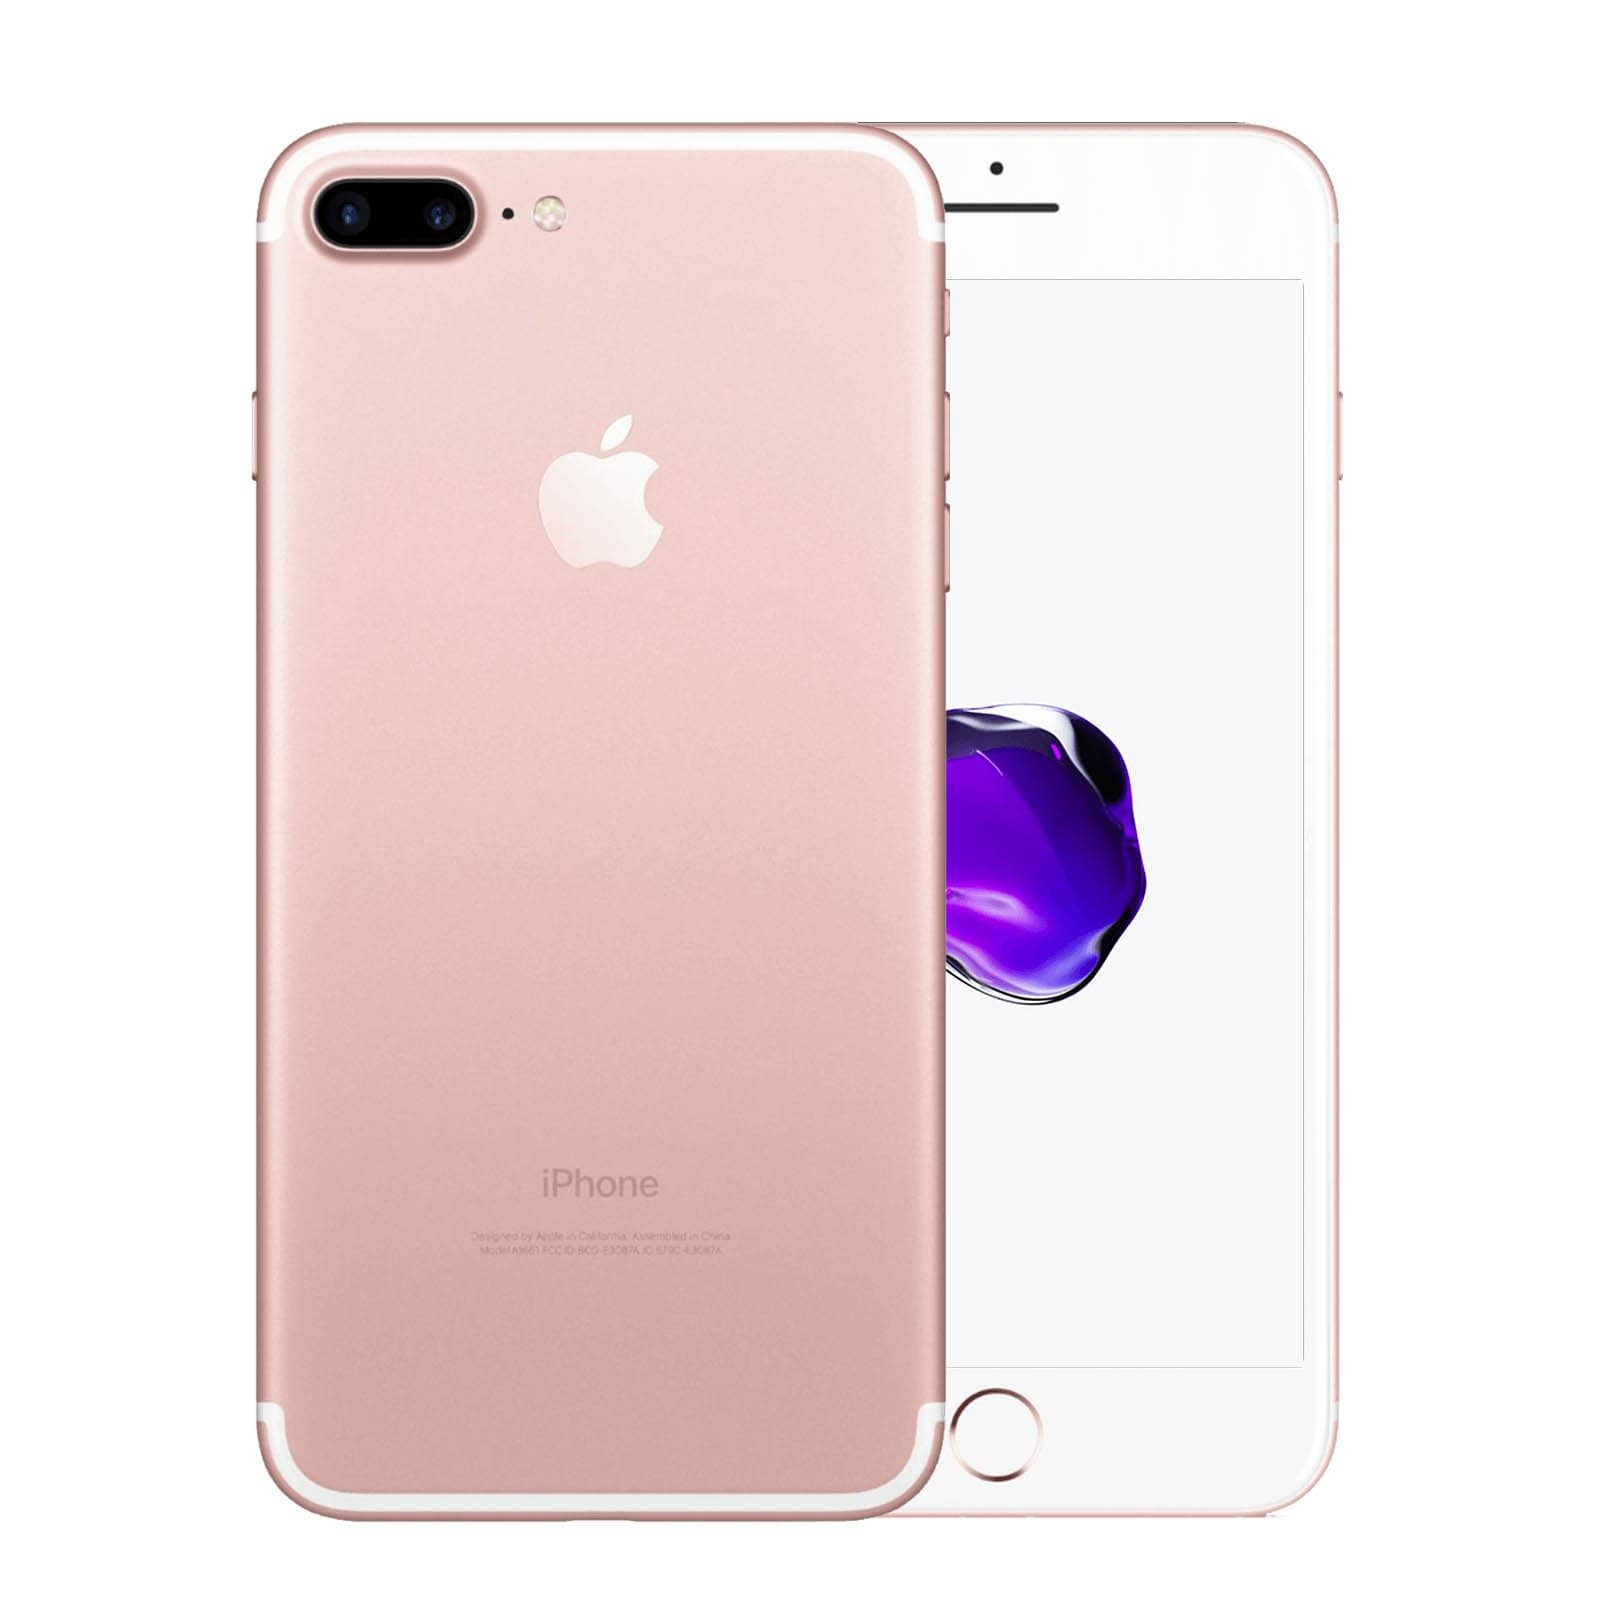 Apple iPhone 7 Plus 32GB Rose Gold Very Good - Unlocked 32GB Rose Gold Very Good